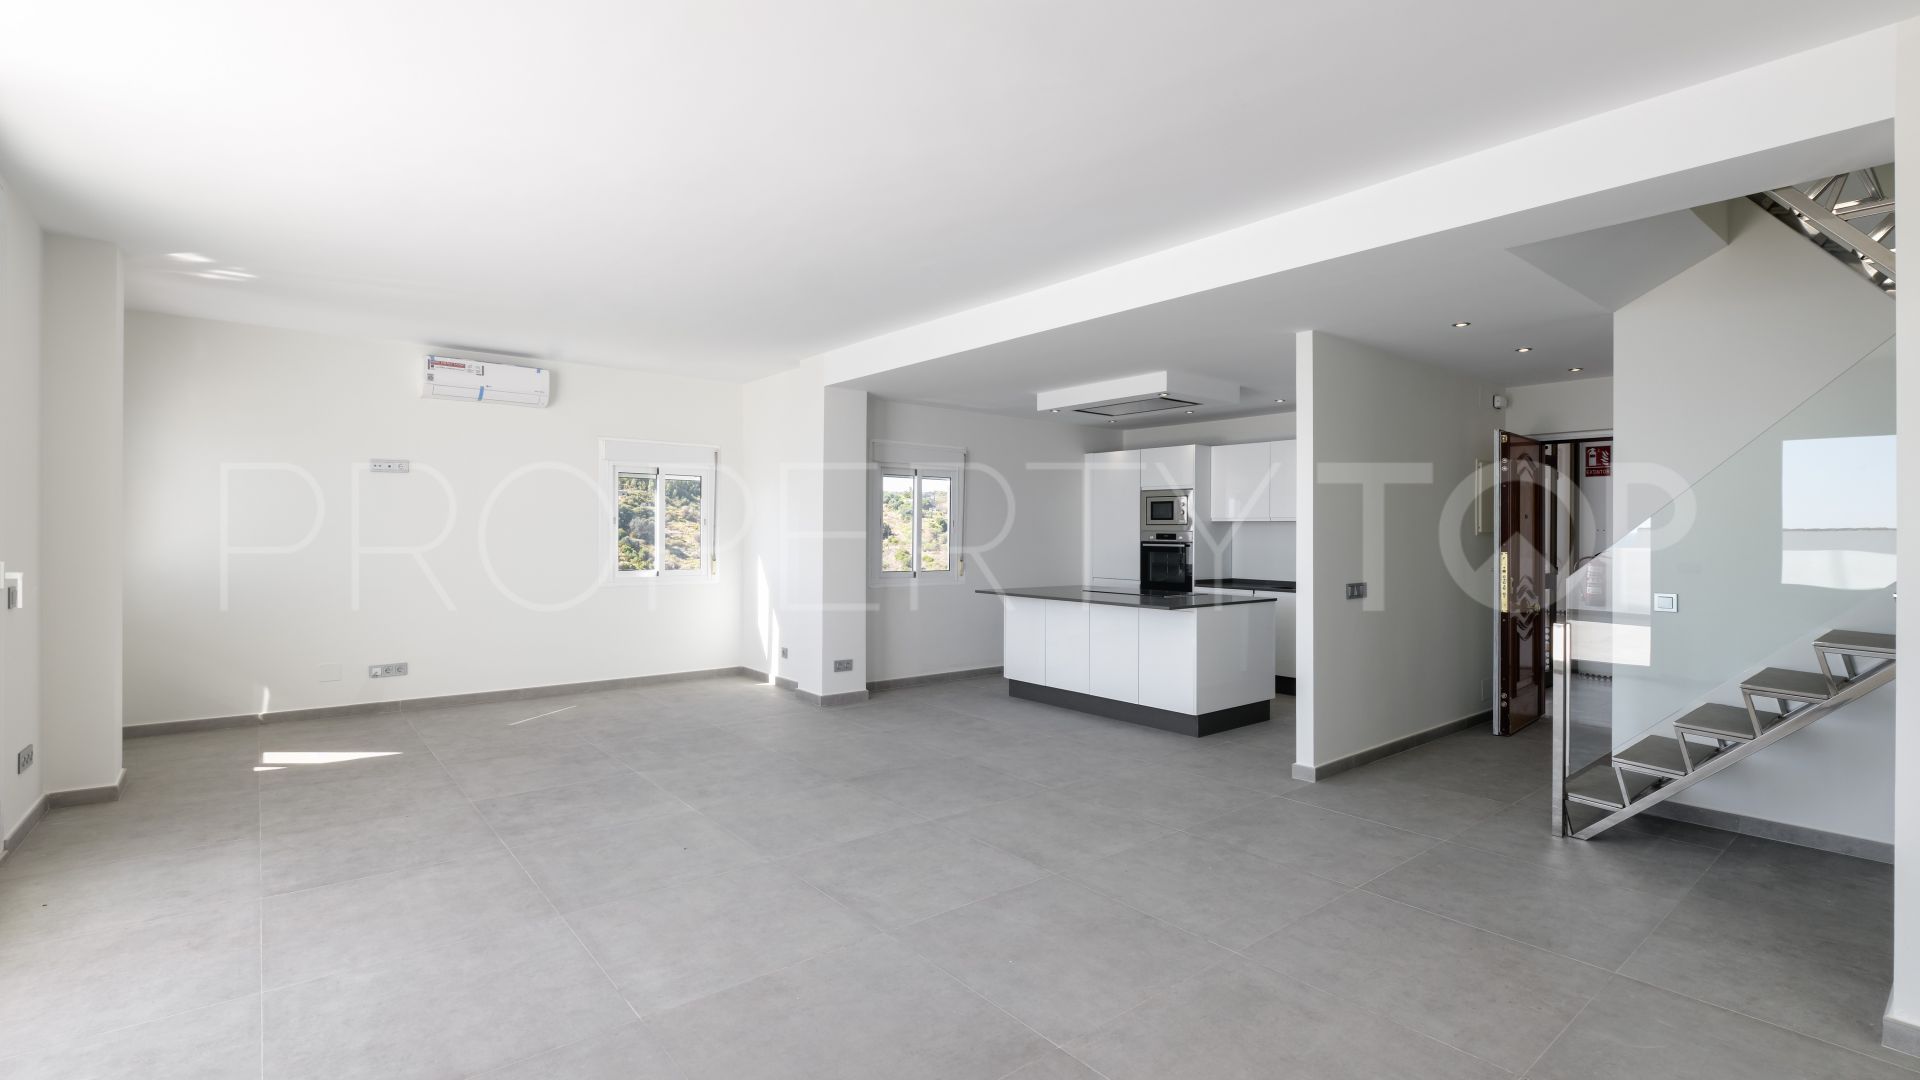 3 bedrooms duplex penthouse in Estepona for sale